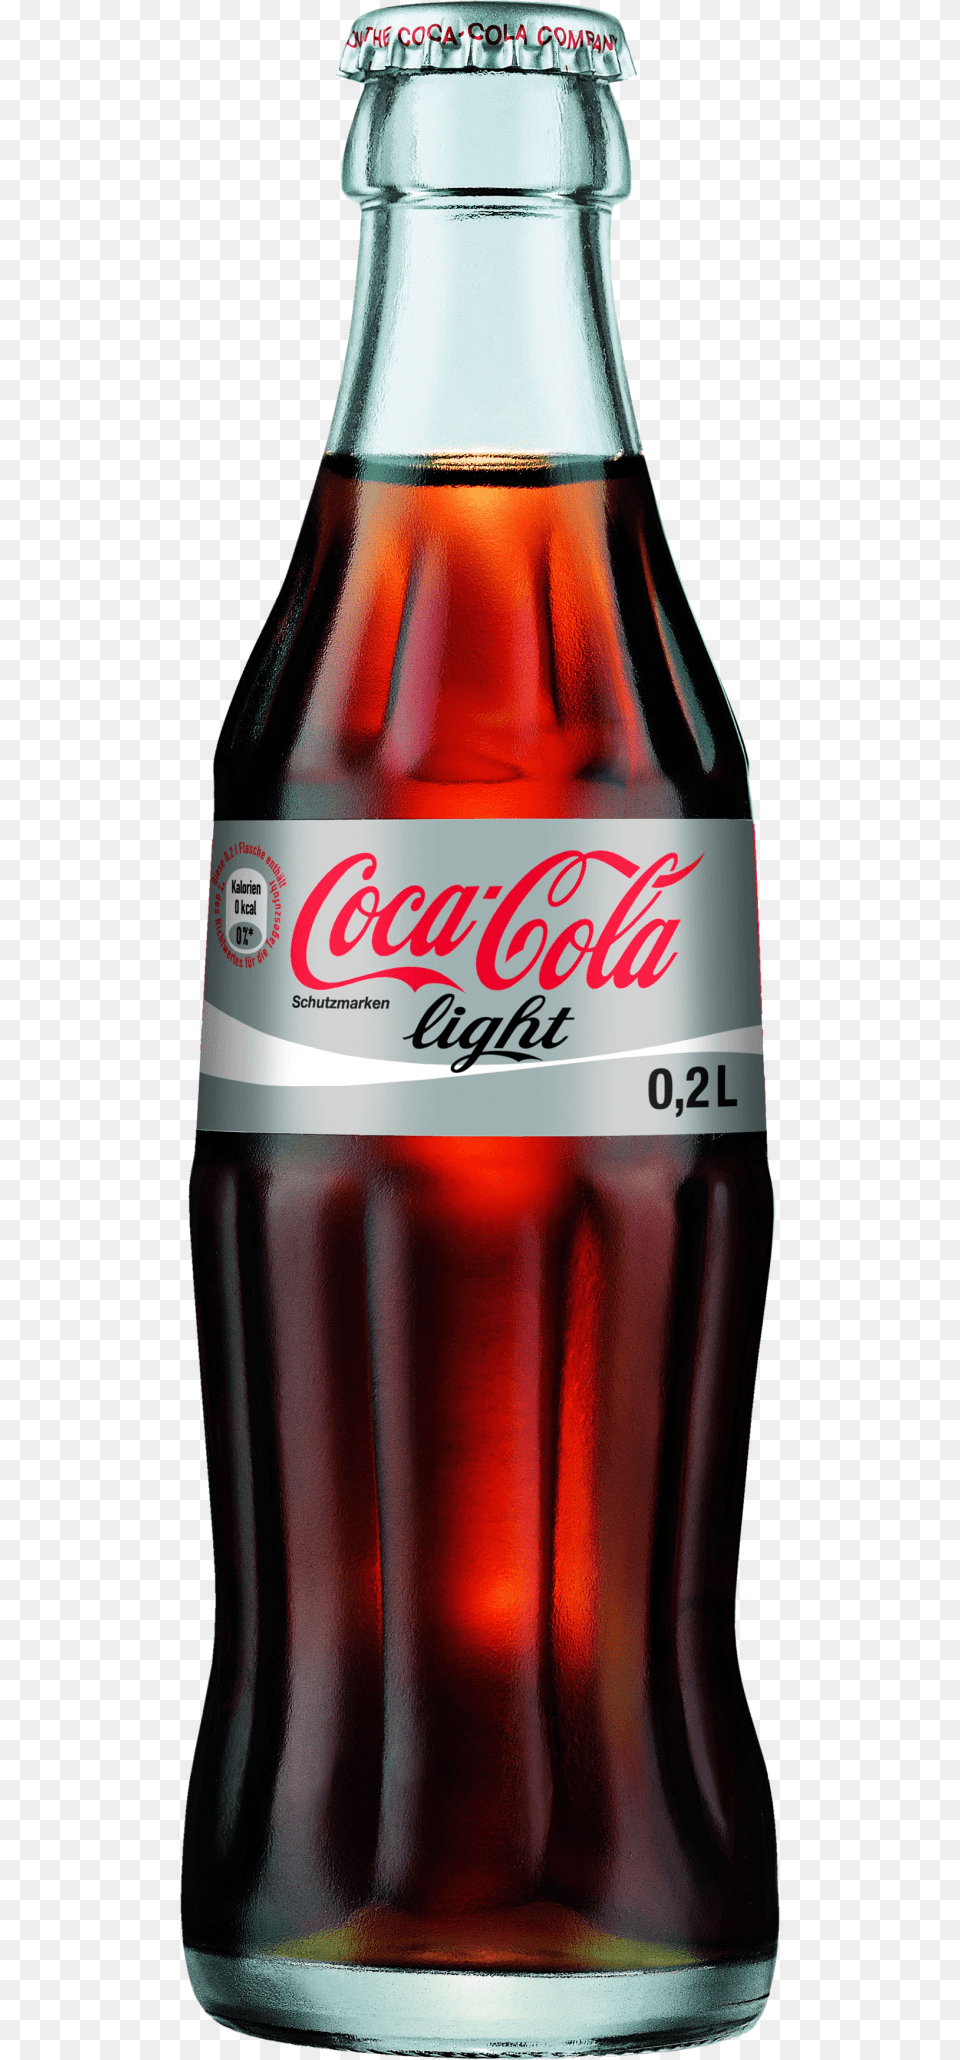 Cocacola Free Download Coca Cola Zero Bottle, Beverage, Coke, Soda, Alcohol Png Image